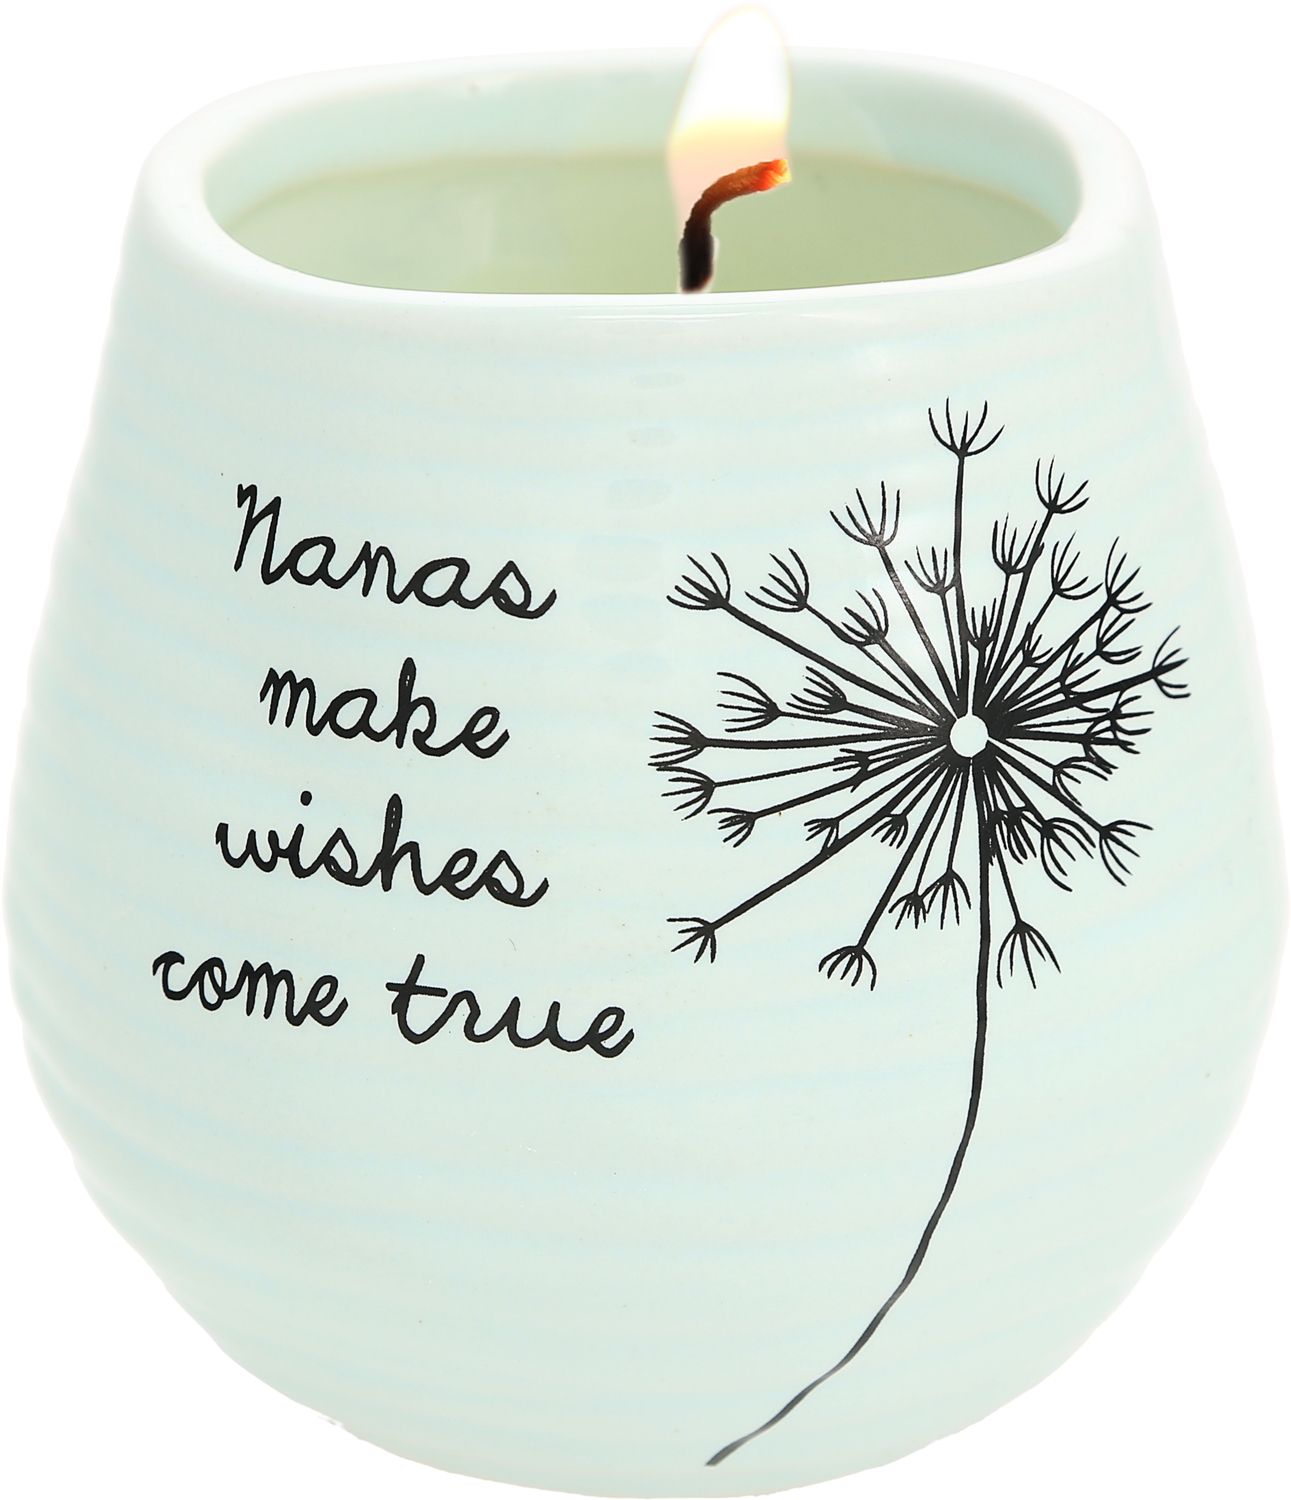 Nana by Dandelion Wishes - Nana - 8 oz - 100% Soy Wax Candle
Scent: Serenity